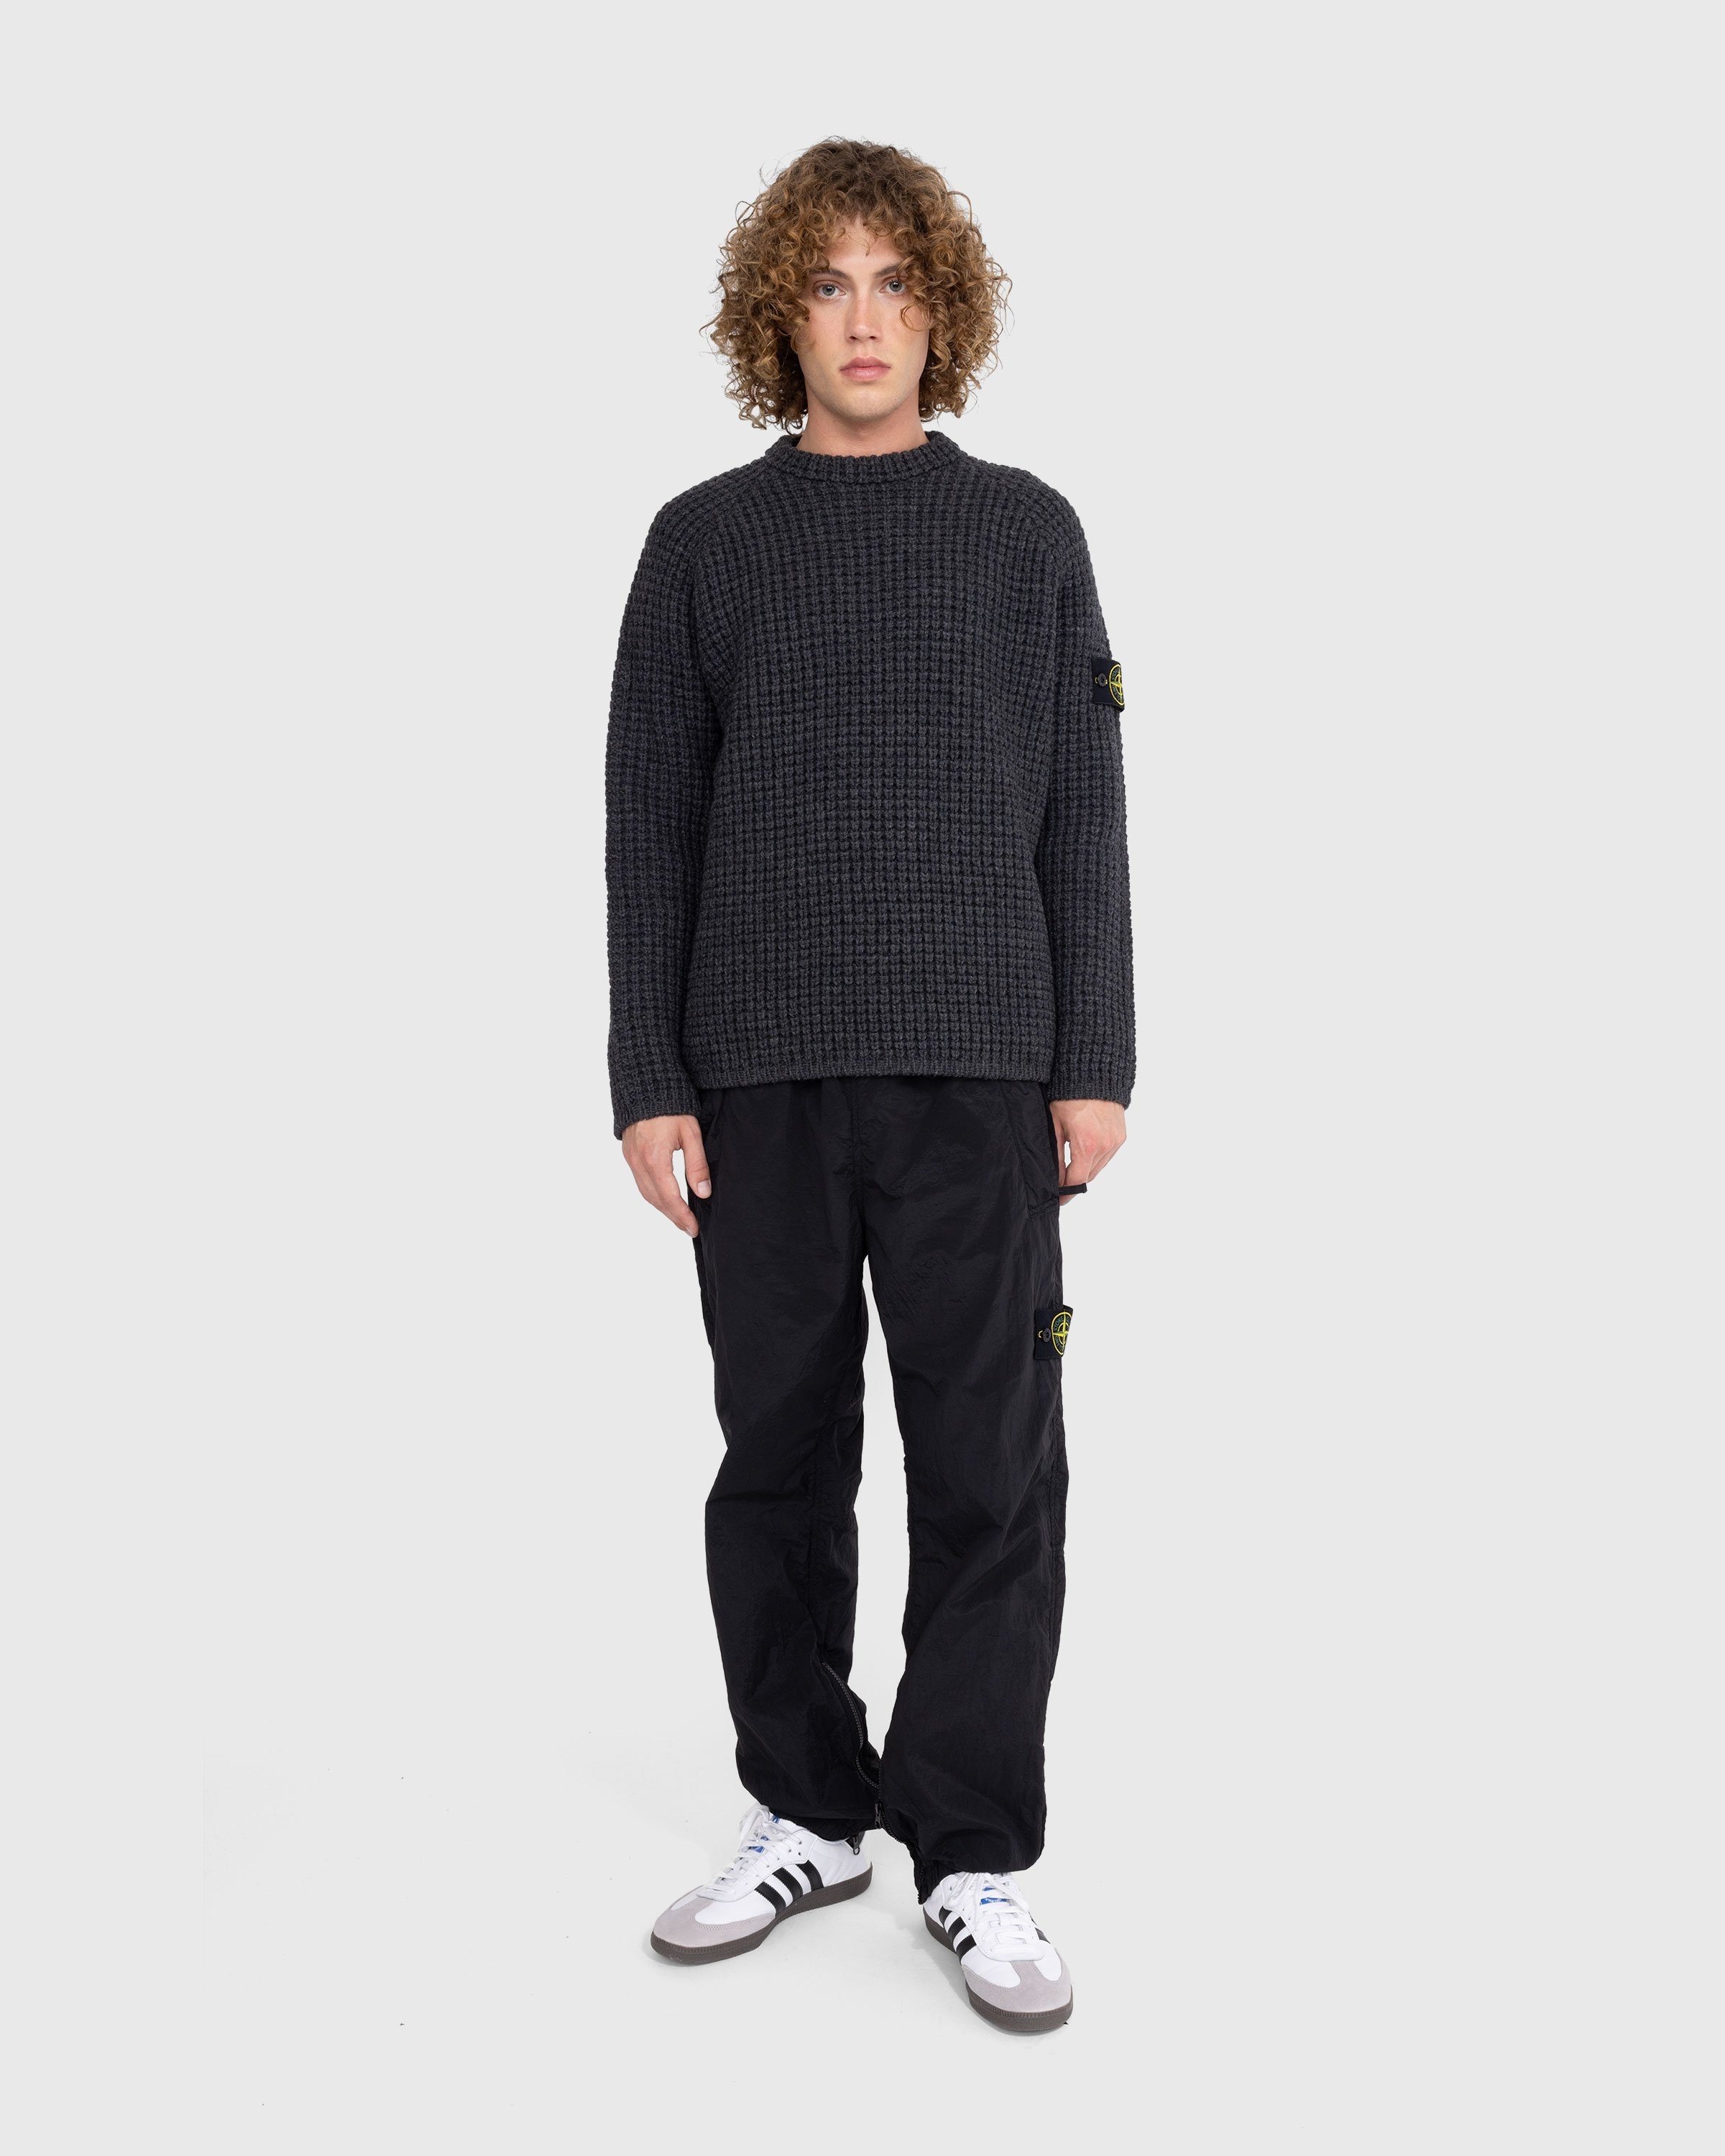 Stone Island – Waffle Knit Sweater Melange Charcoal - Knitwear - Grey - Image 5